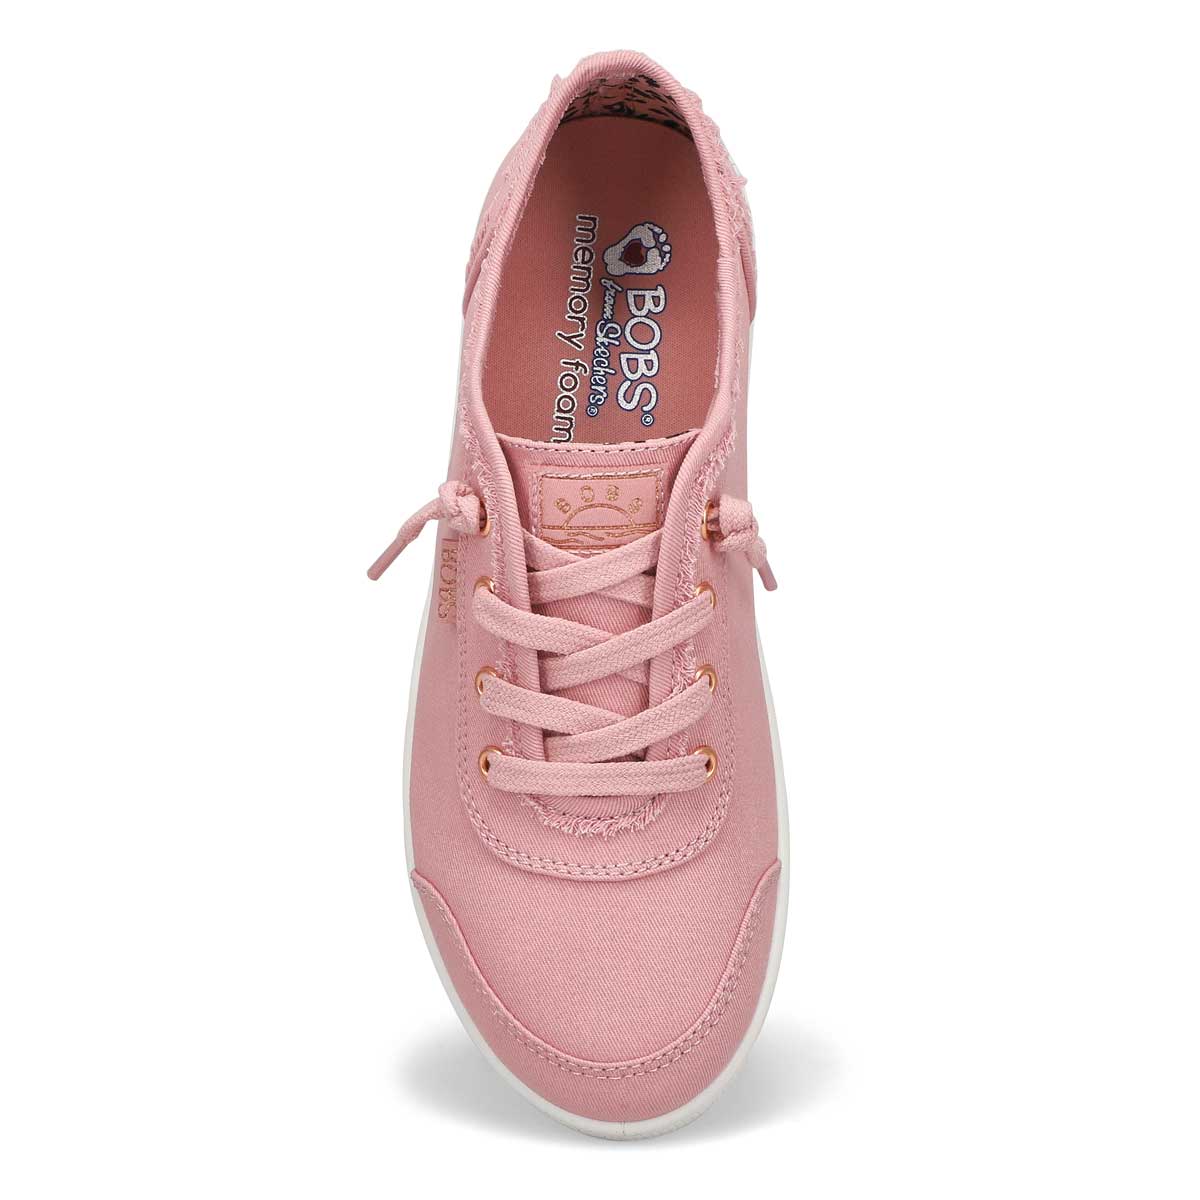 Womens Bobs B Cute Slip On Sneaker - Rose